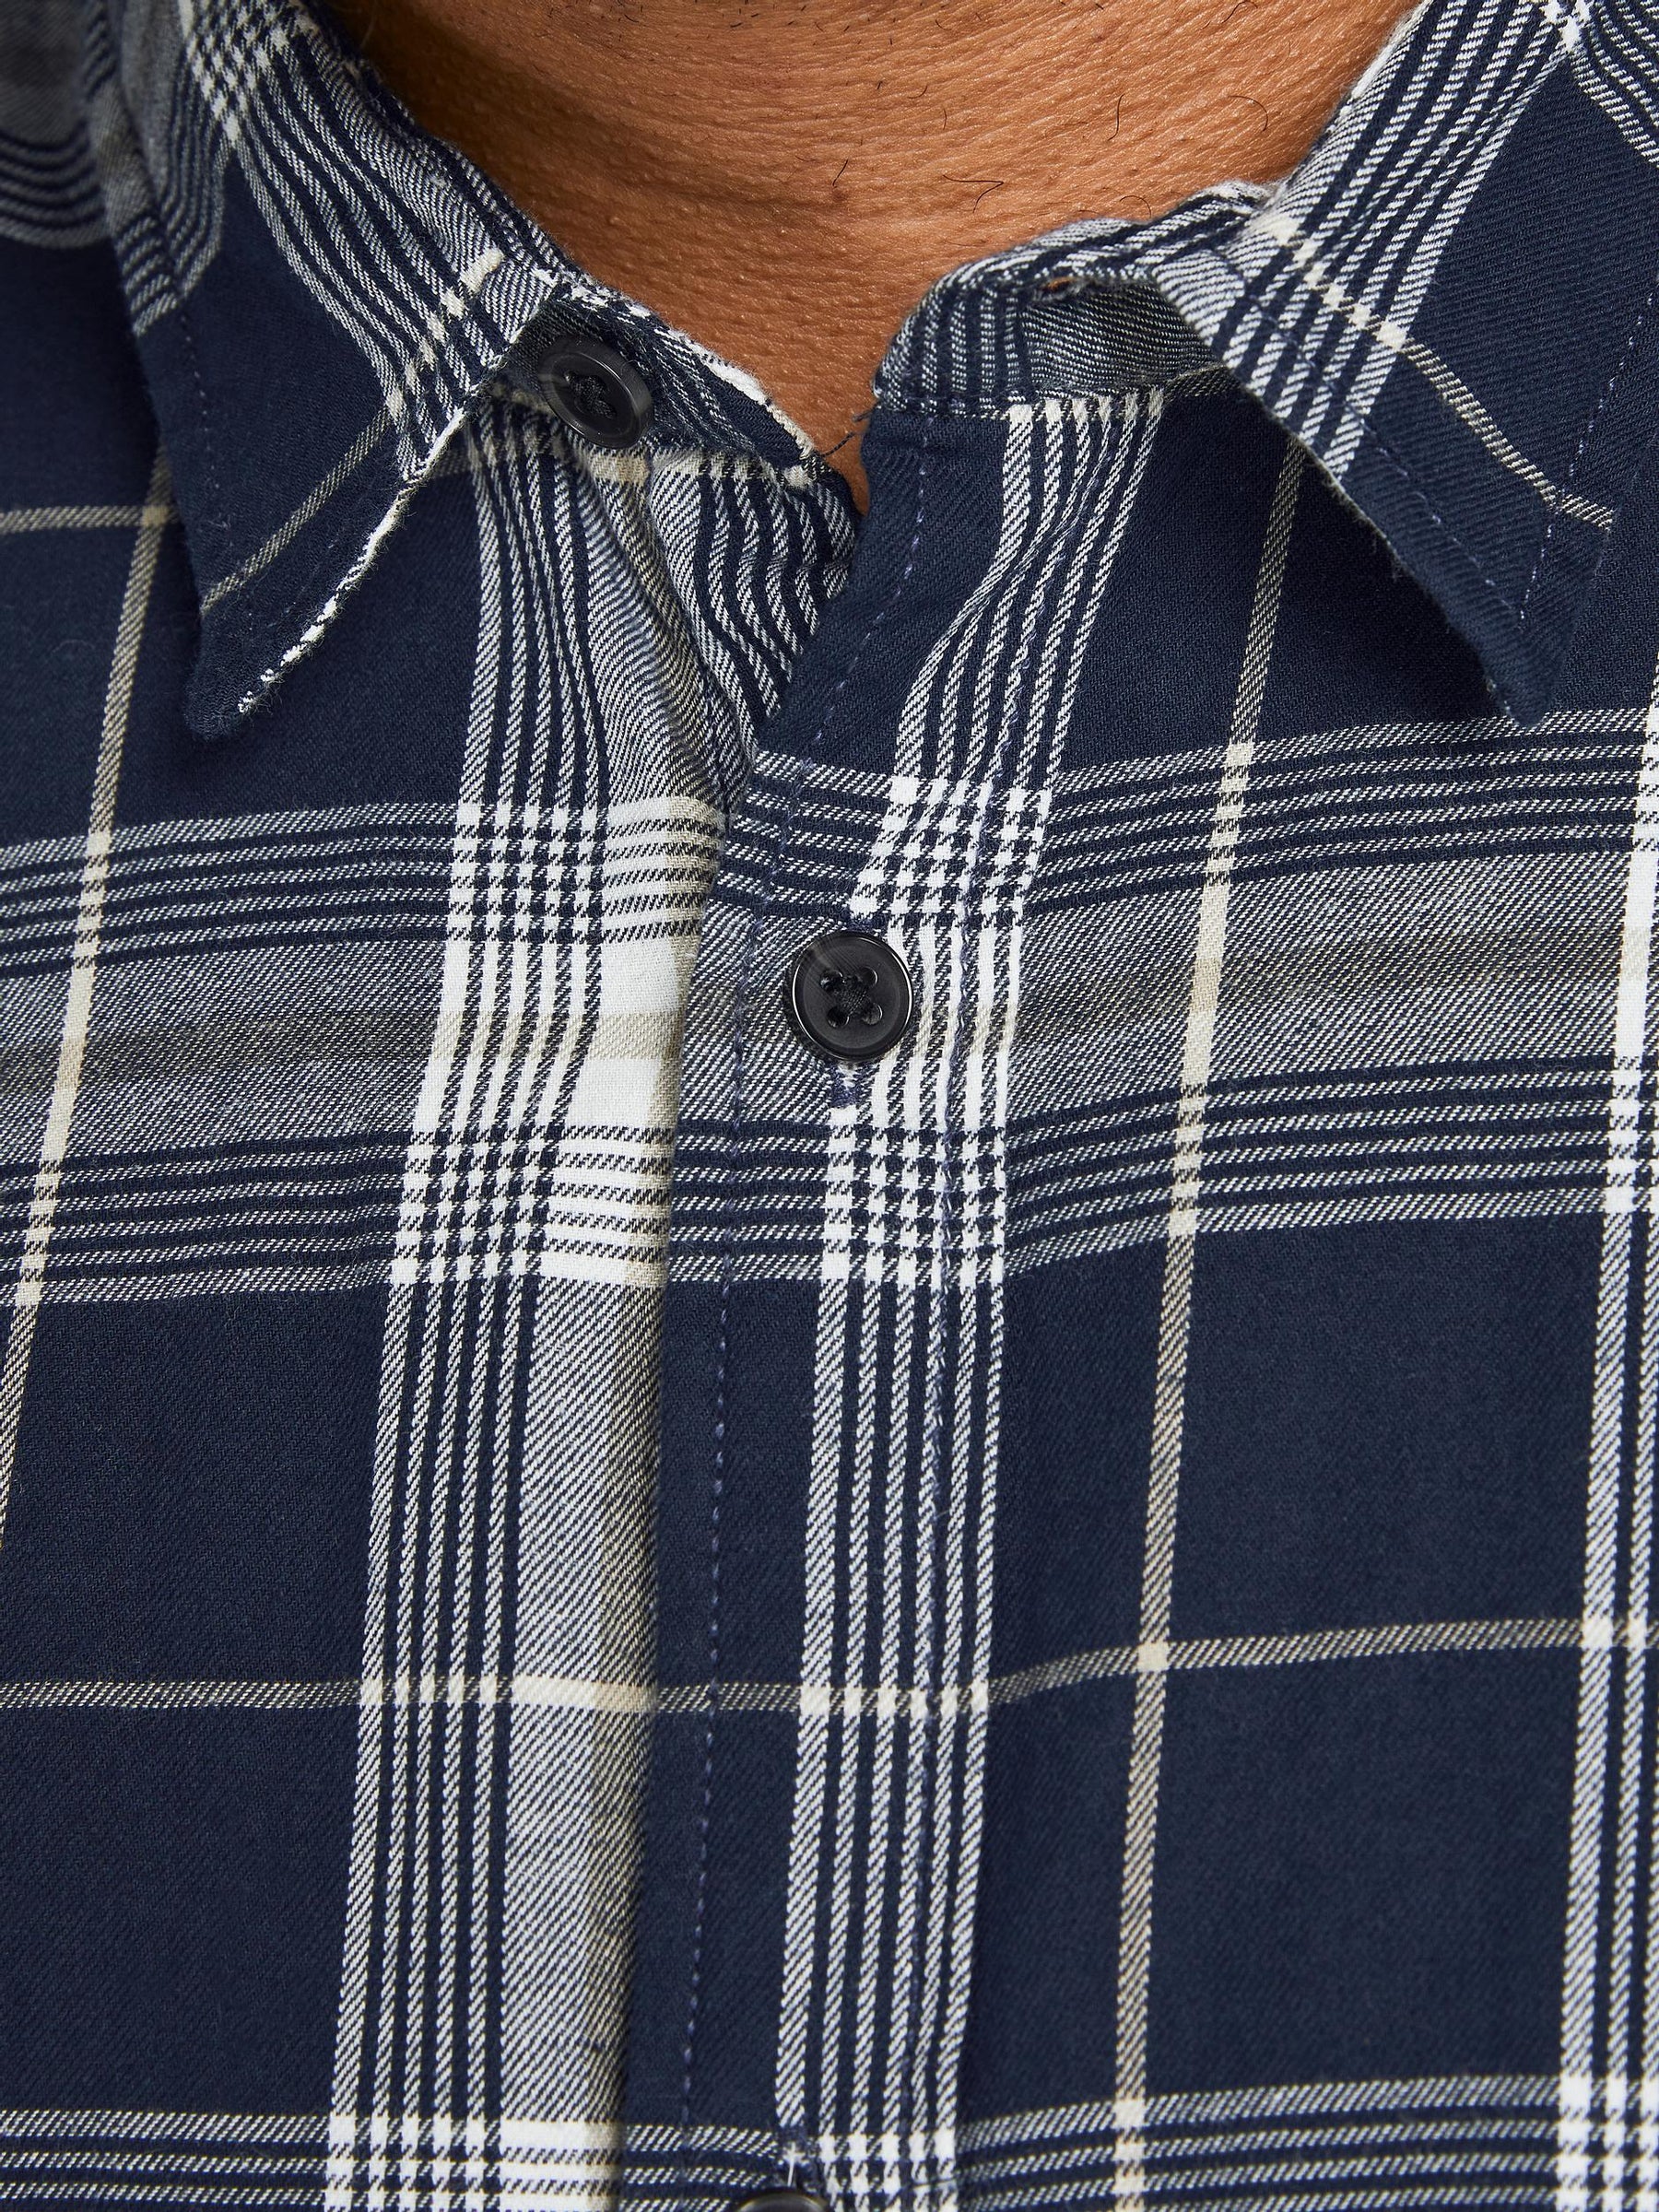 JORBLASTER Long Sleeve Check Shirt